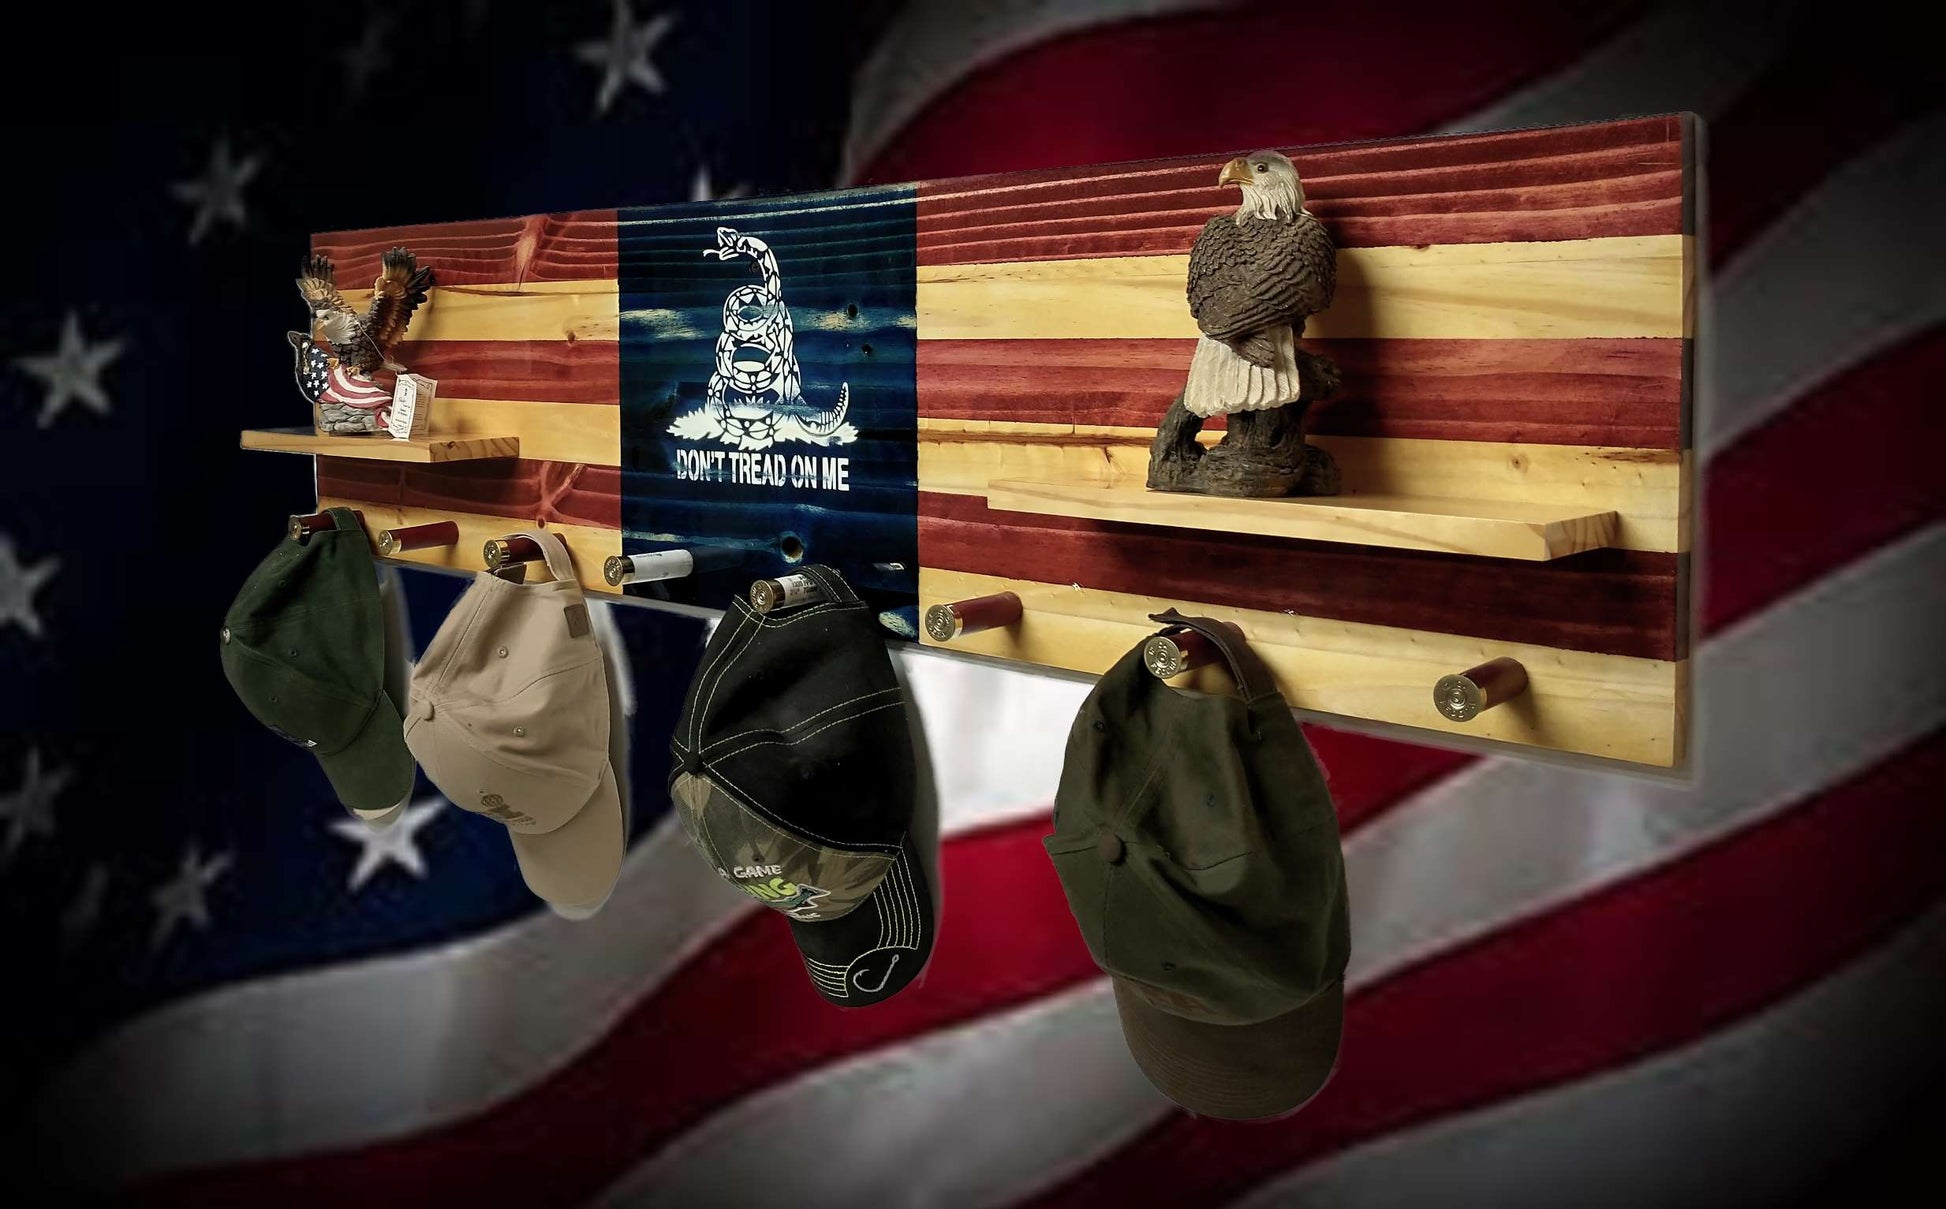 Walker Wood Gifts Hat & Coat Rack Don't Tread on Me Rustic Flag Coat Rack Shelf Wall Hanging Shotgun Shell Pegs Americana Patriotic Decor, Gift, FREE SHIPPING